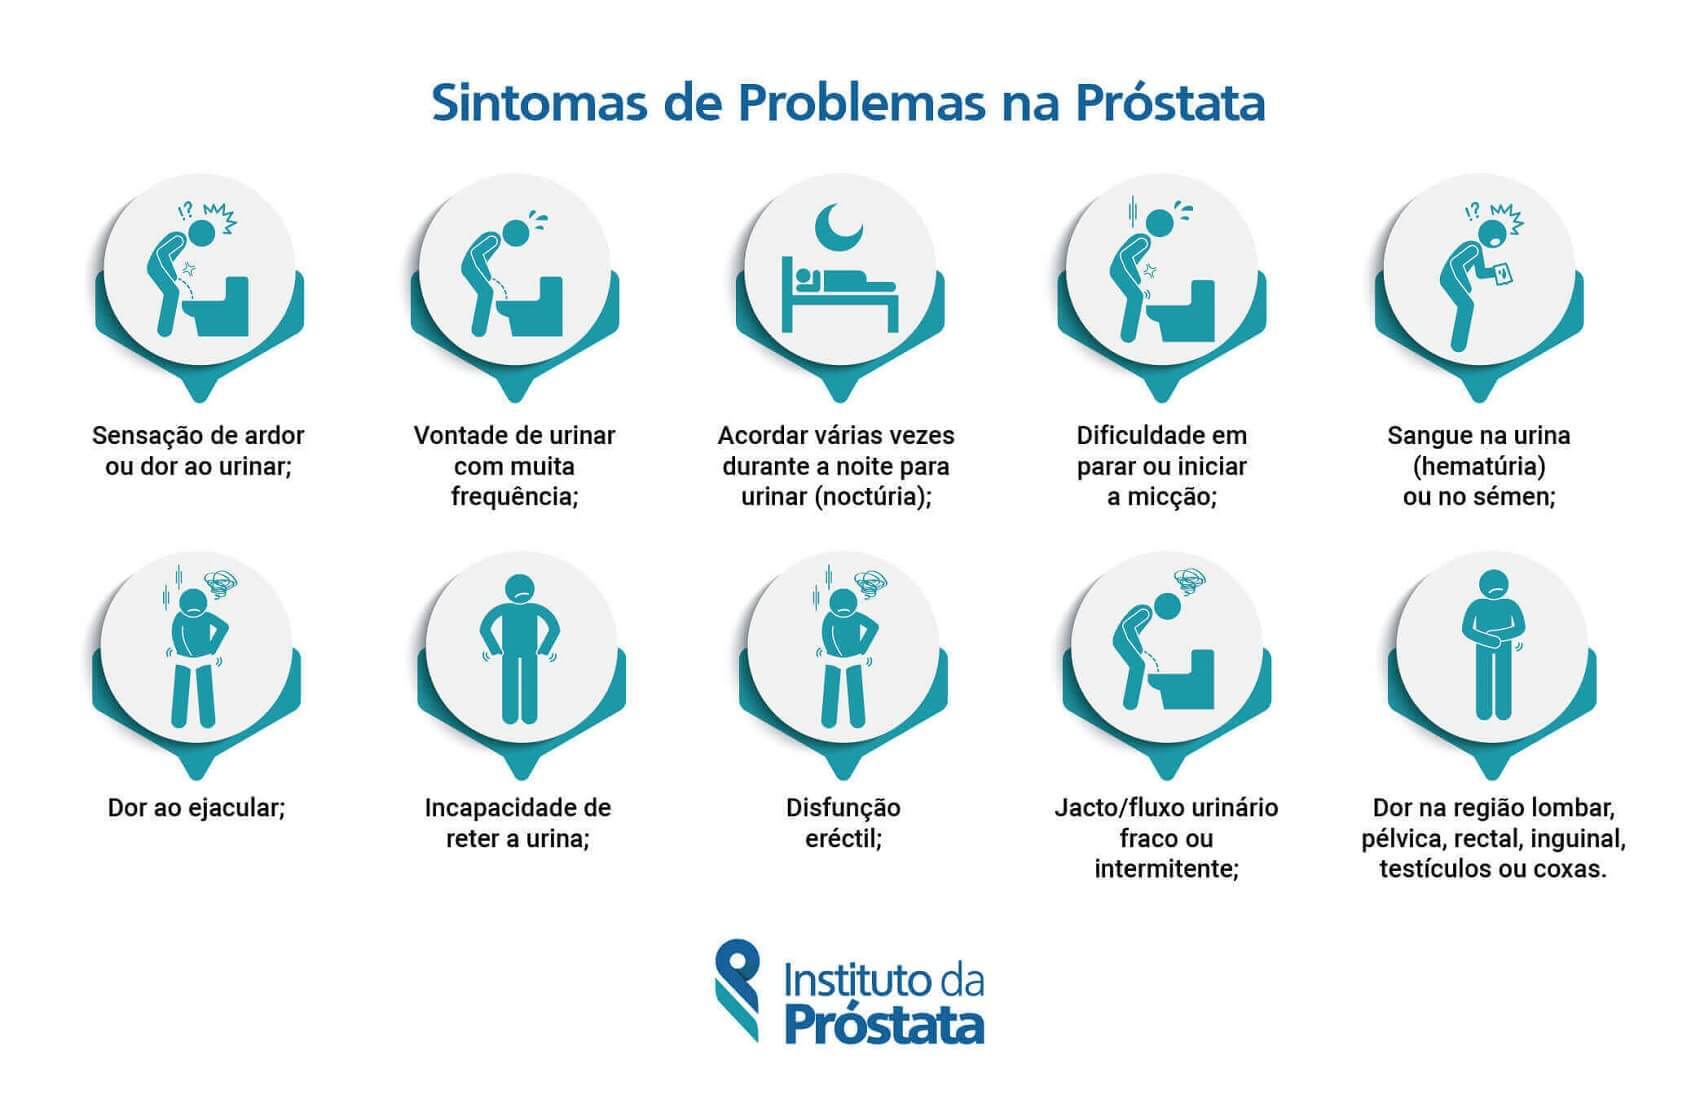 Cancer la prostata sintomas - punticrisene.ro